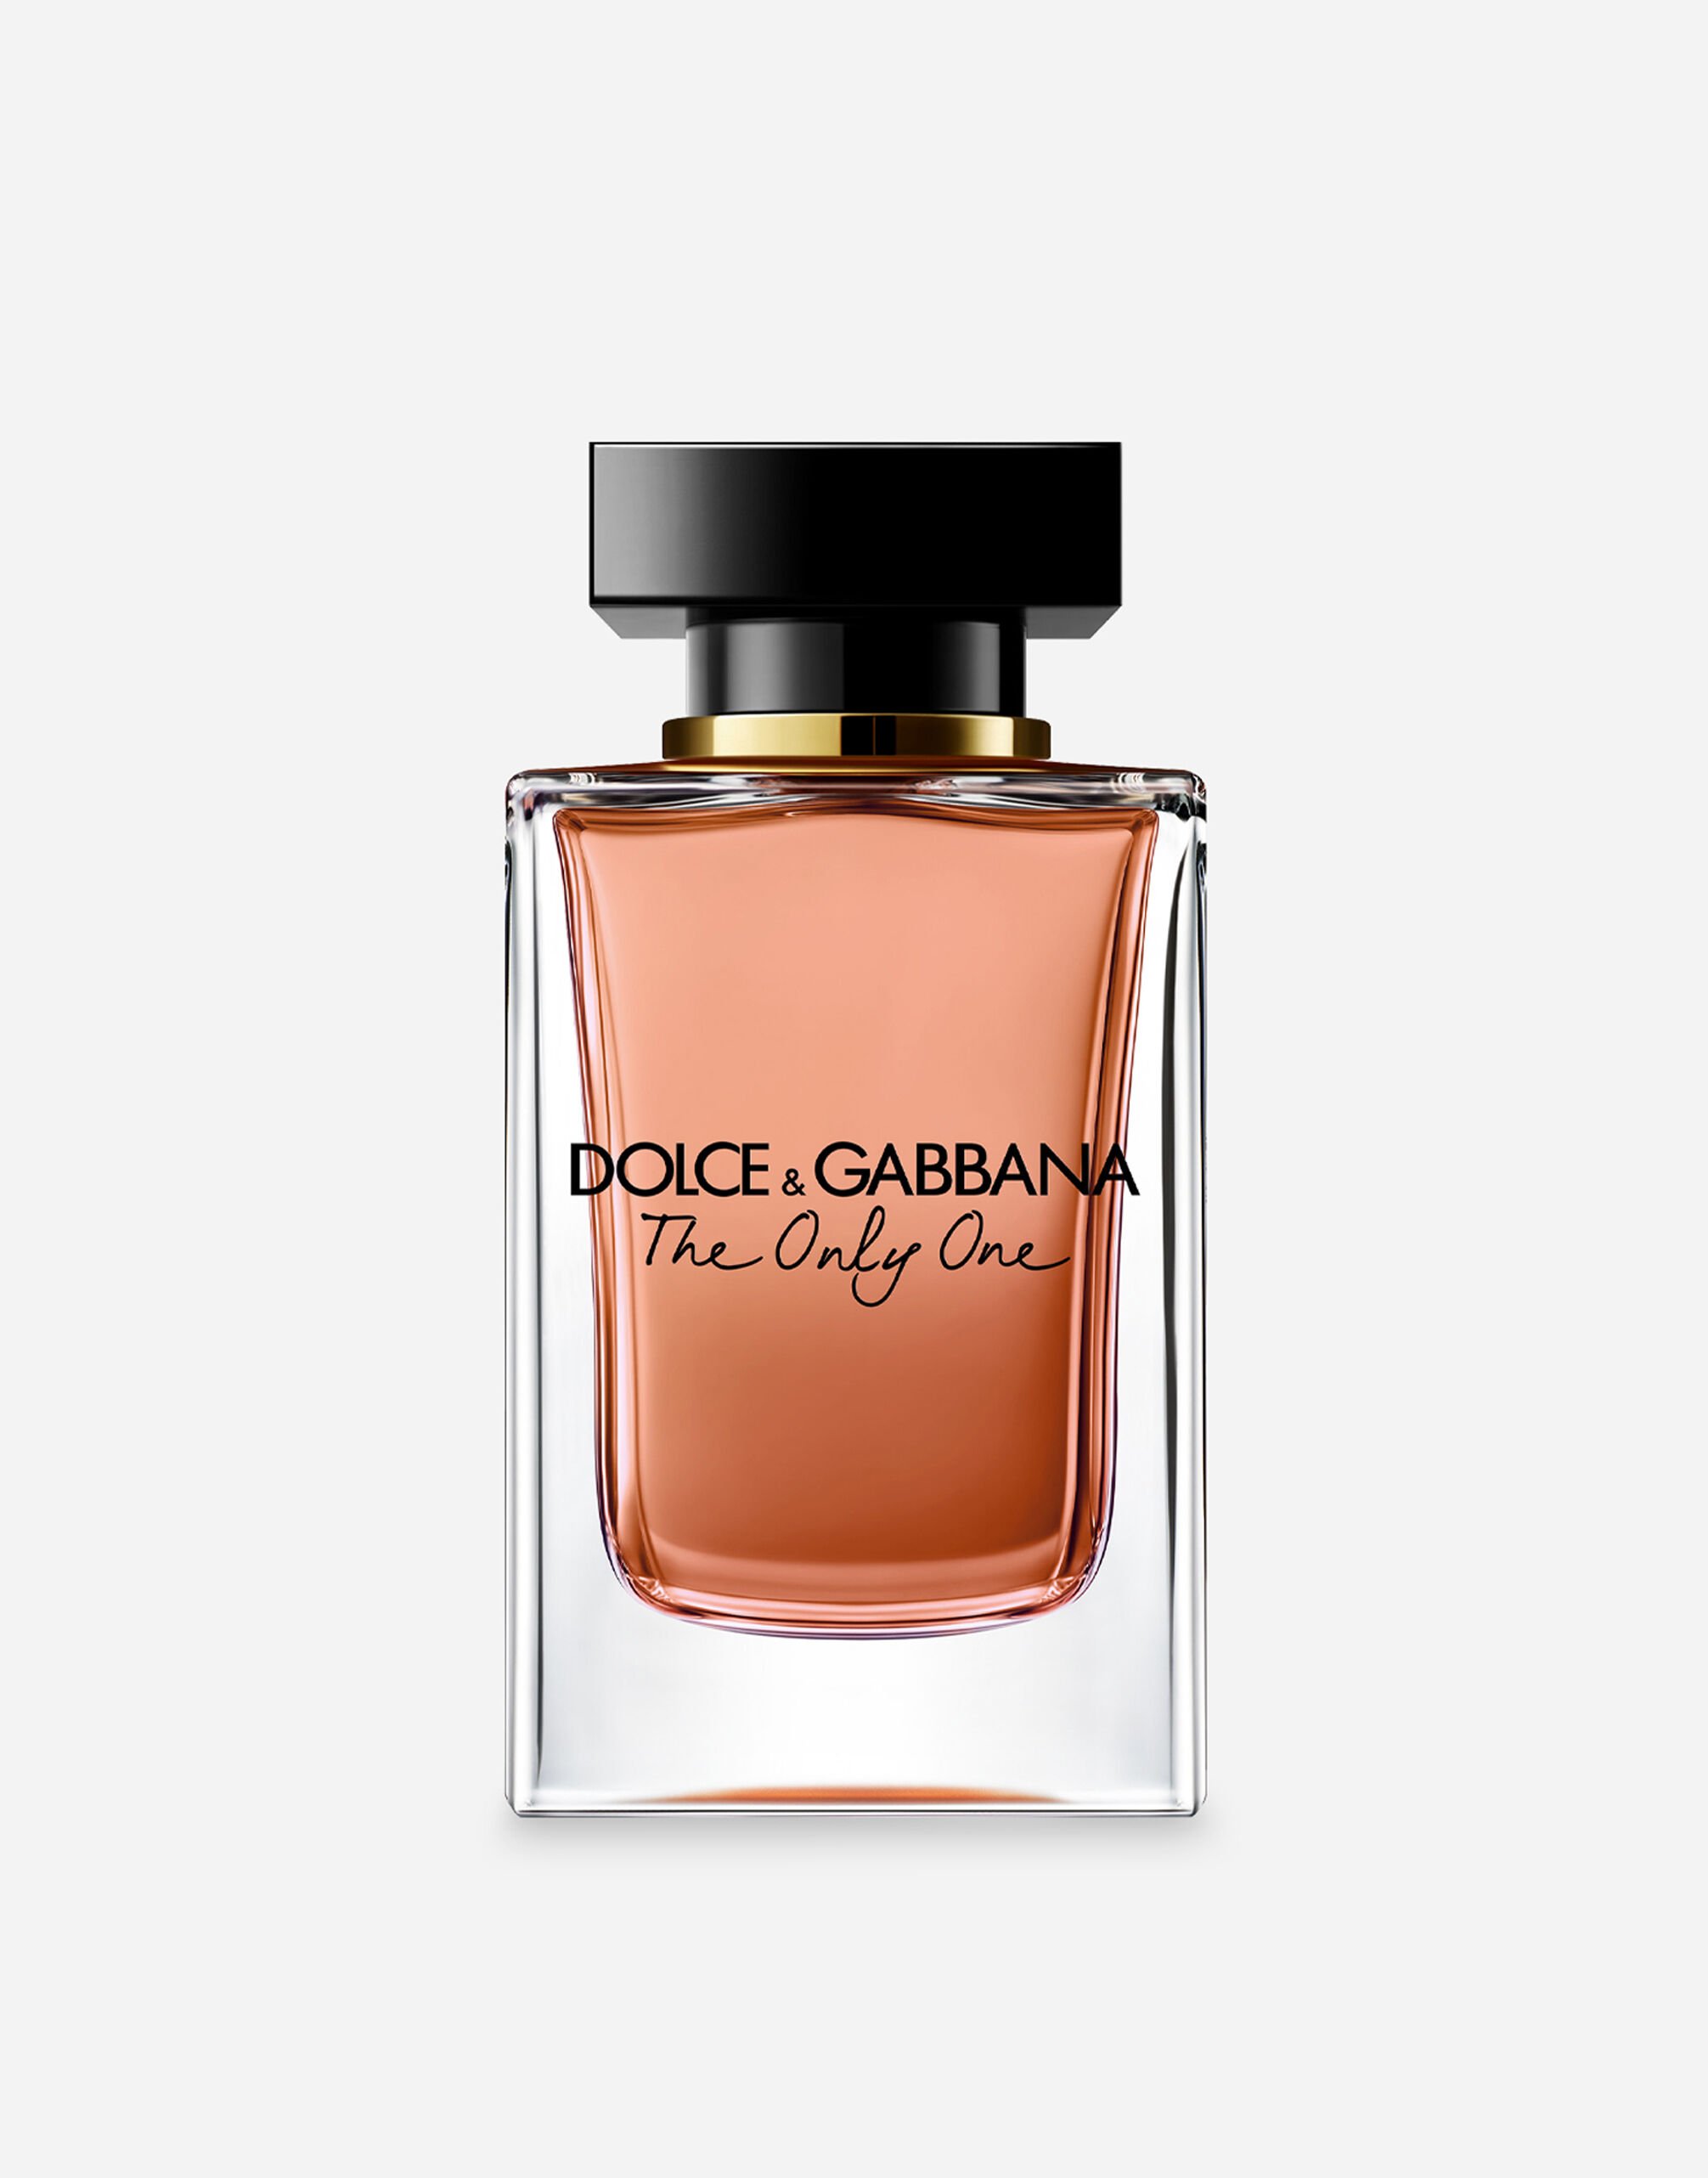 Dolce & Gabbana The Only One Eau de Parfum - VP001UVP000